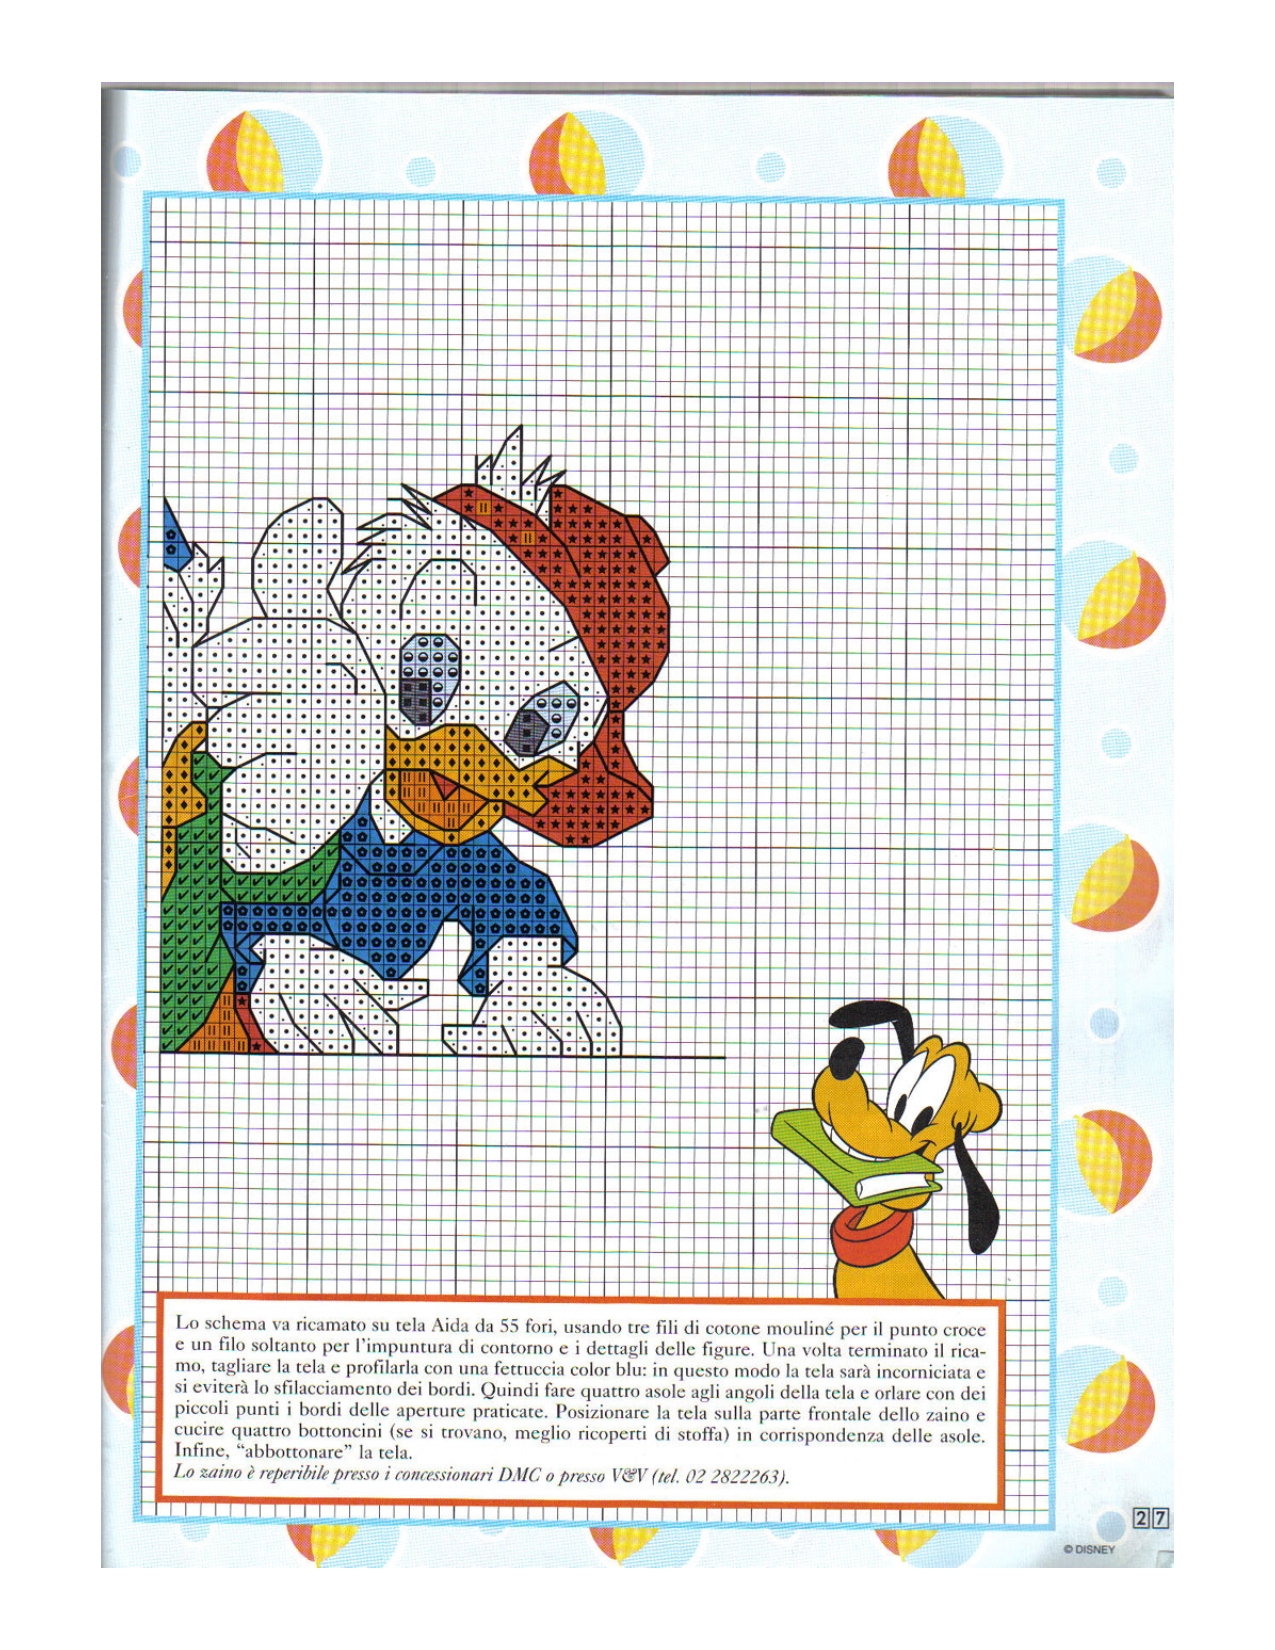 Nice cross stitch pattern with Huey Dewey and Louie (2)